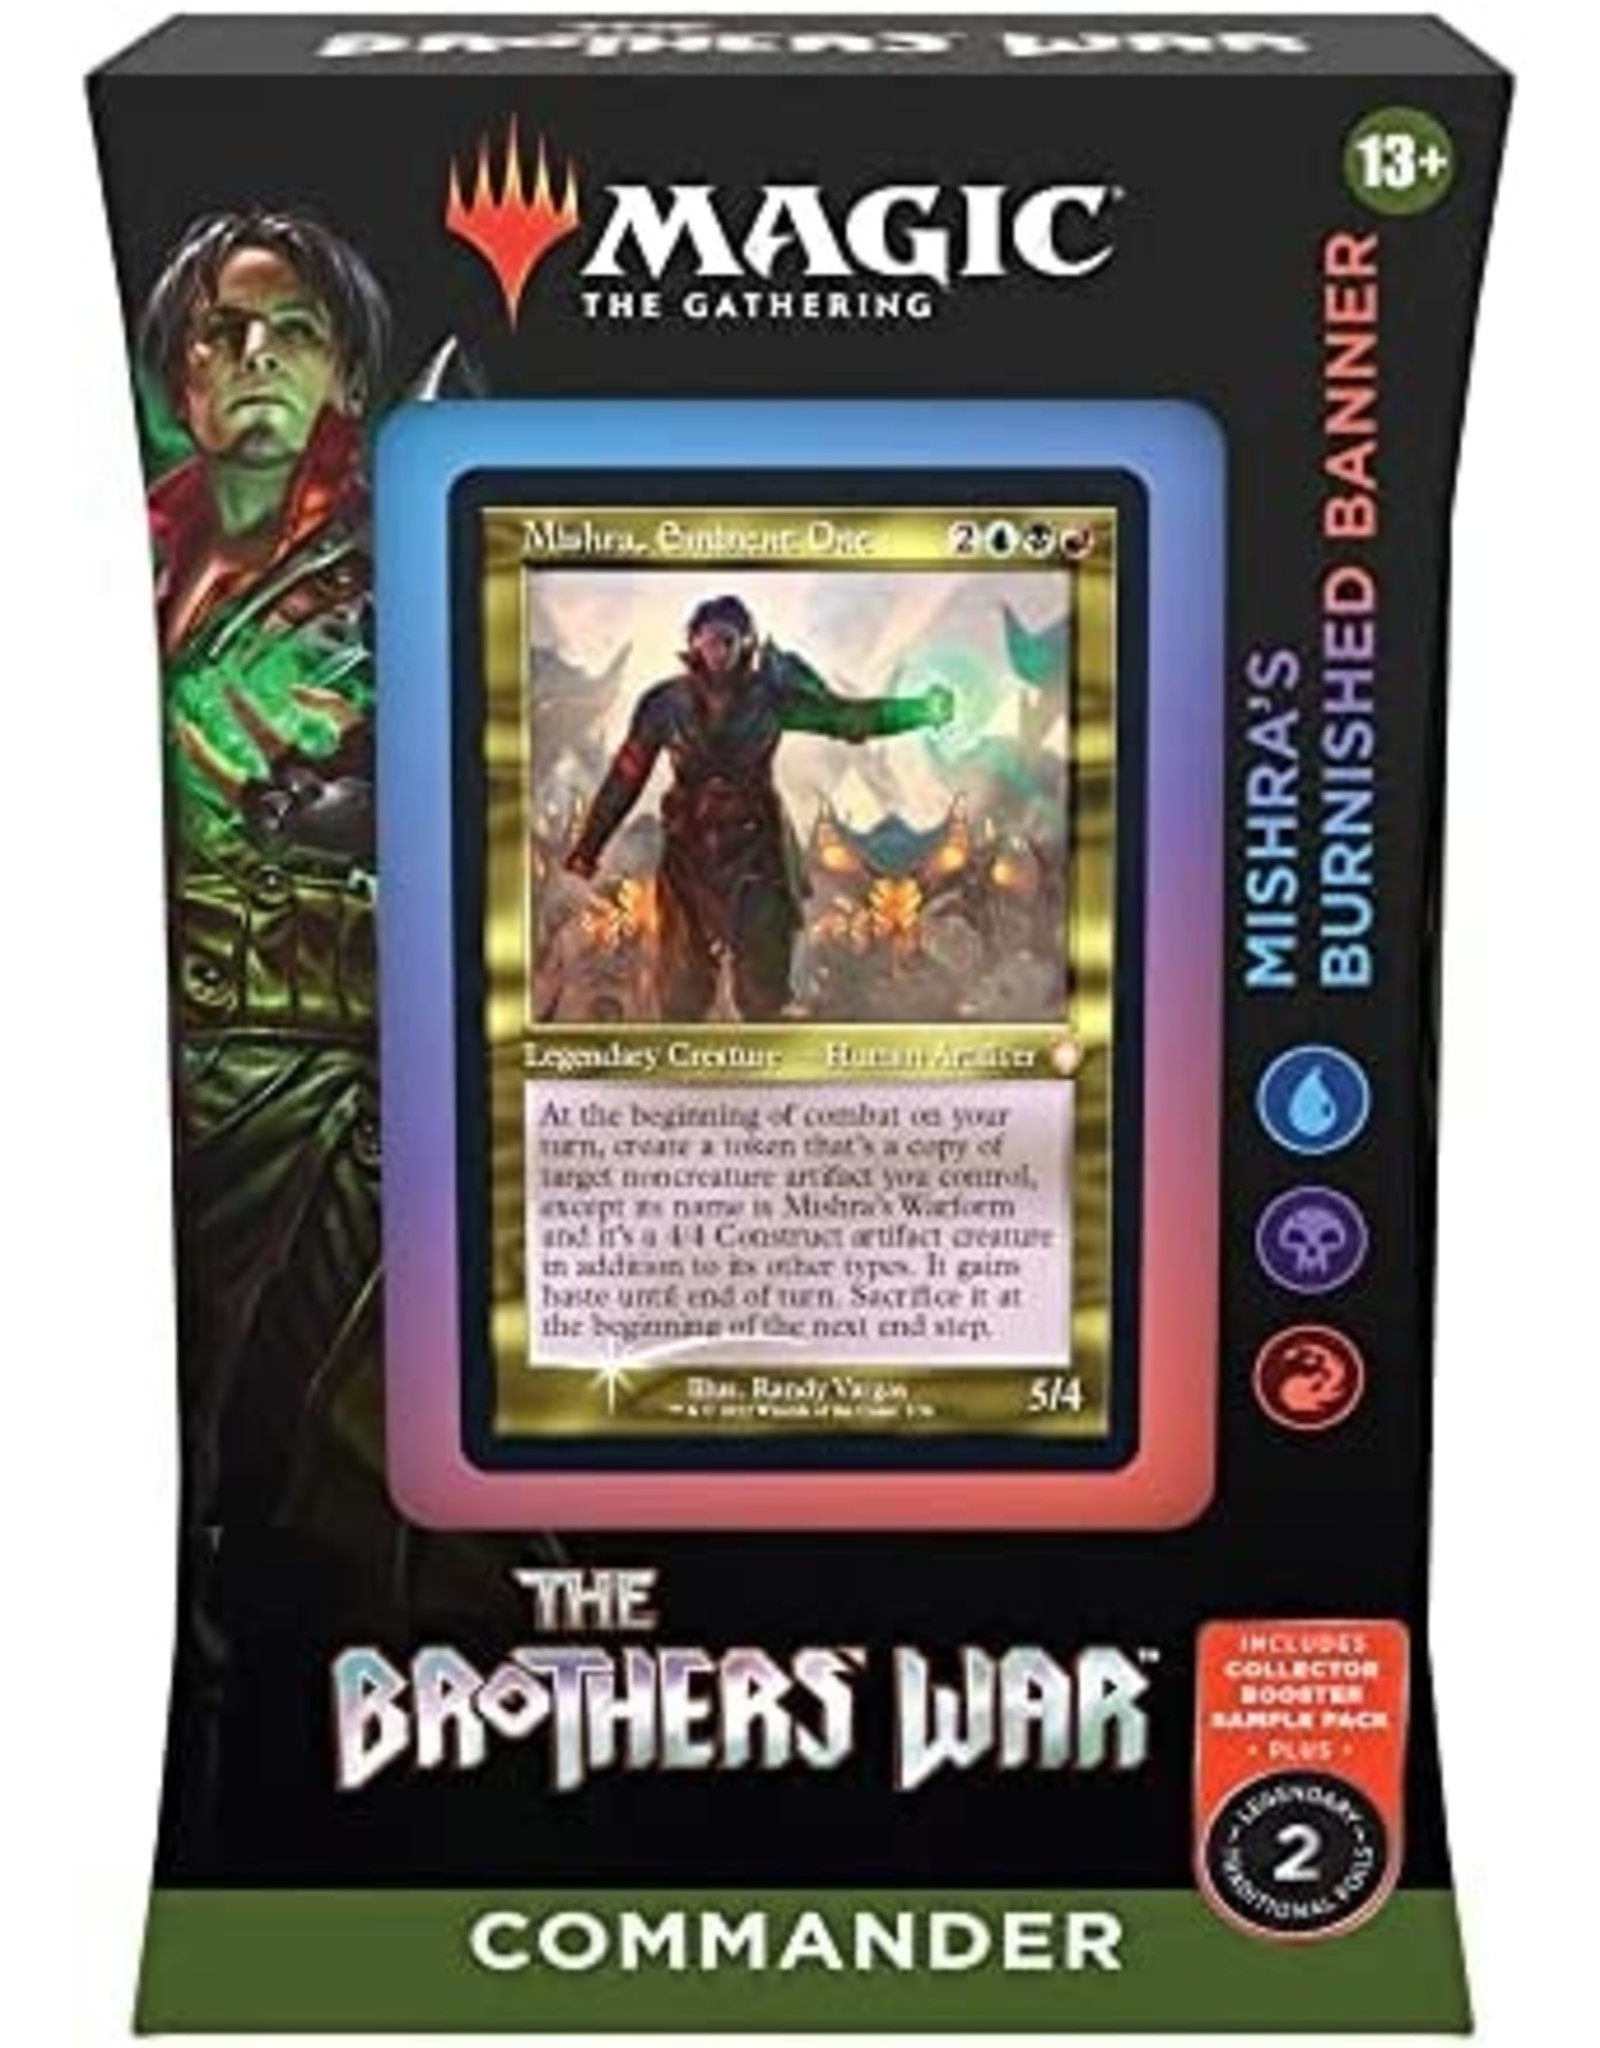 Magic the Gathering: The Brothers' War - Commander Deck - Mishra's Burnished Banner